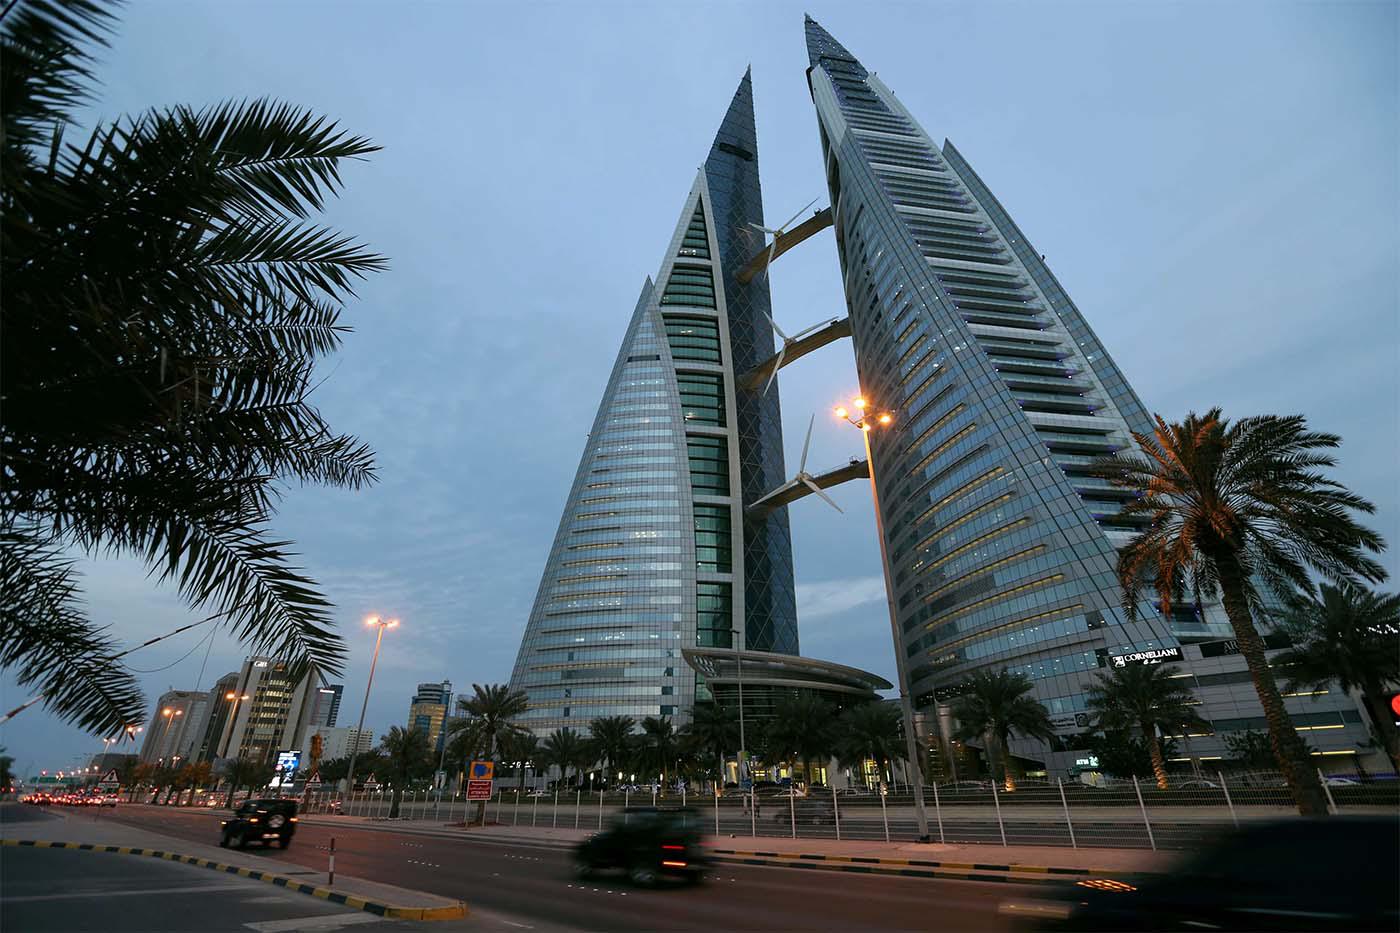 Bahrain will receive instalments up until 2023